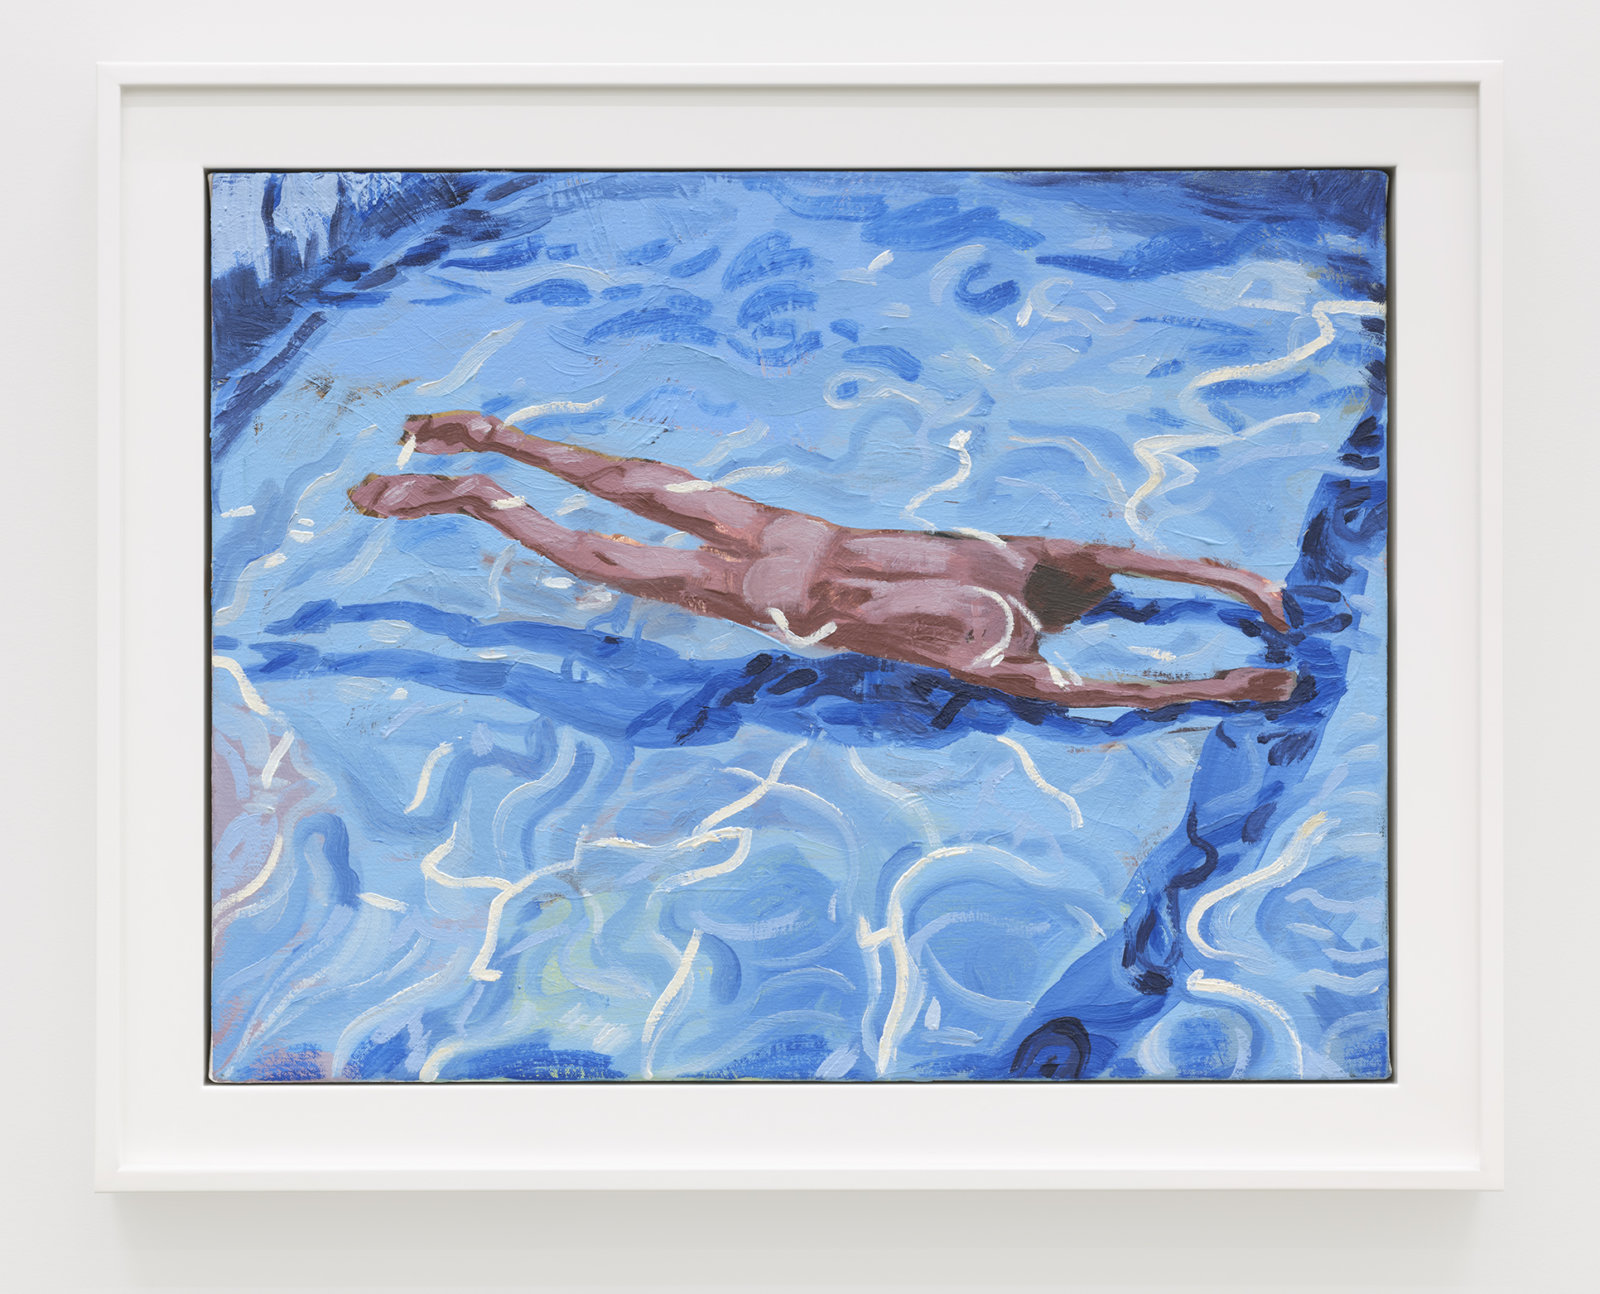 Damian Moppett, Untitled (Blue Pool), 2020, oil on canvas, 20 x 25 in. (51 x 64 cm)